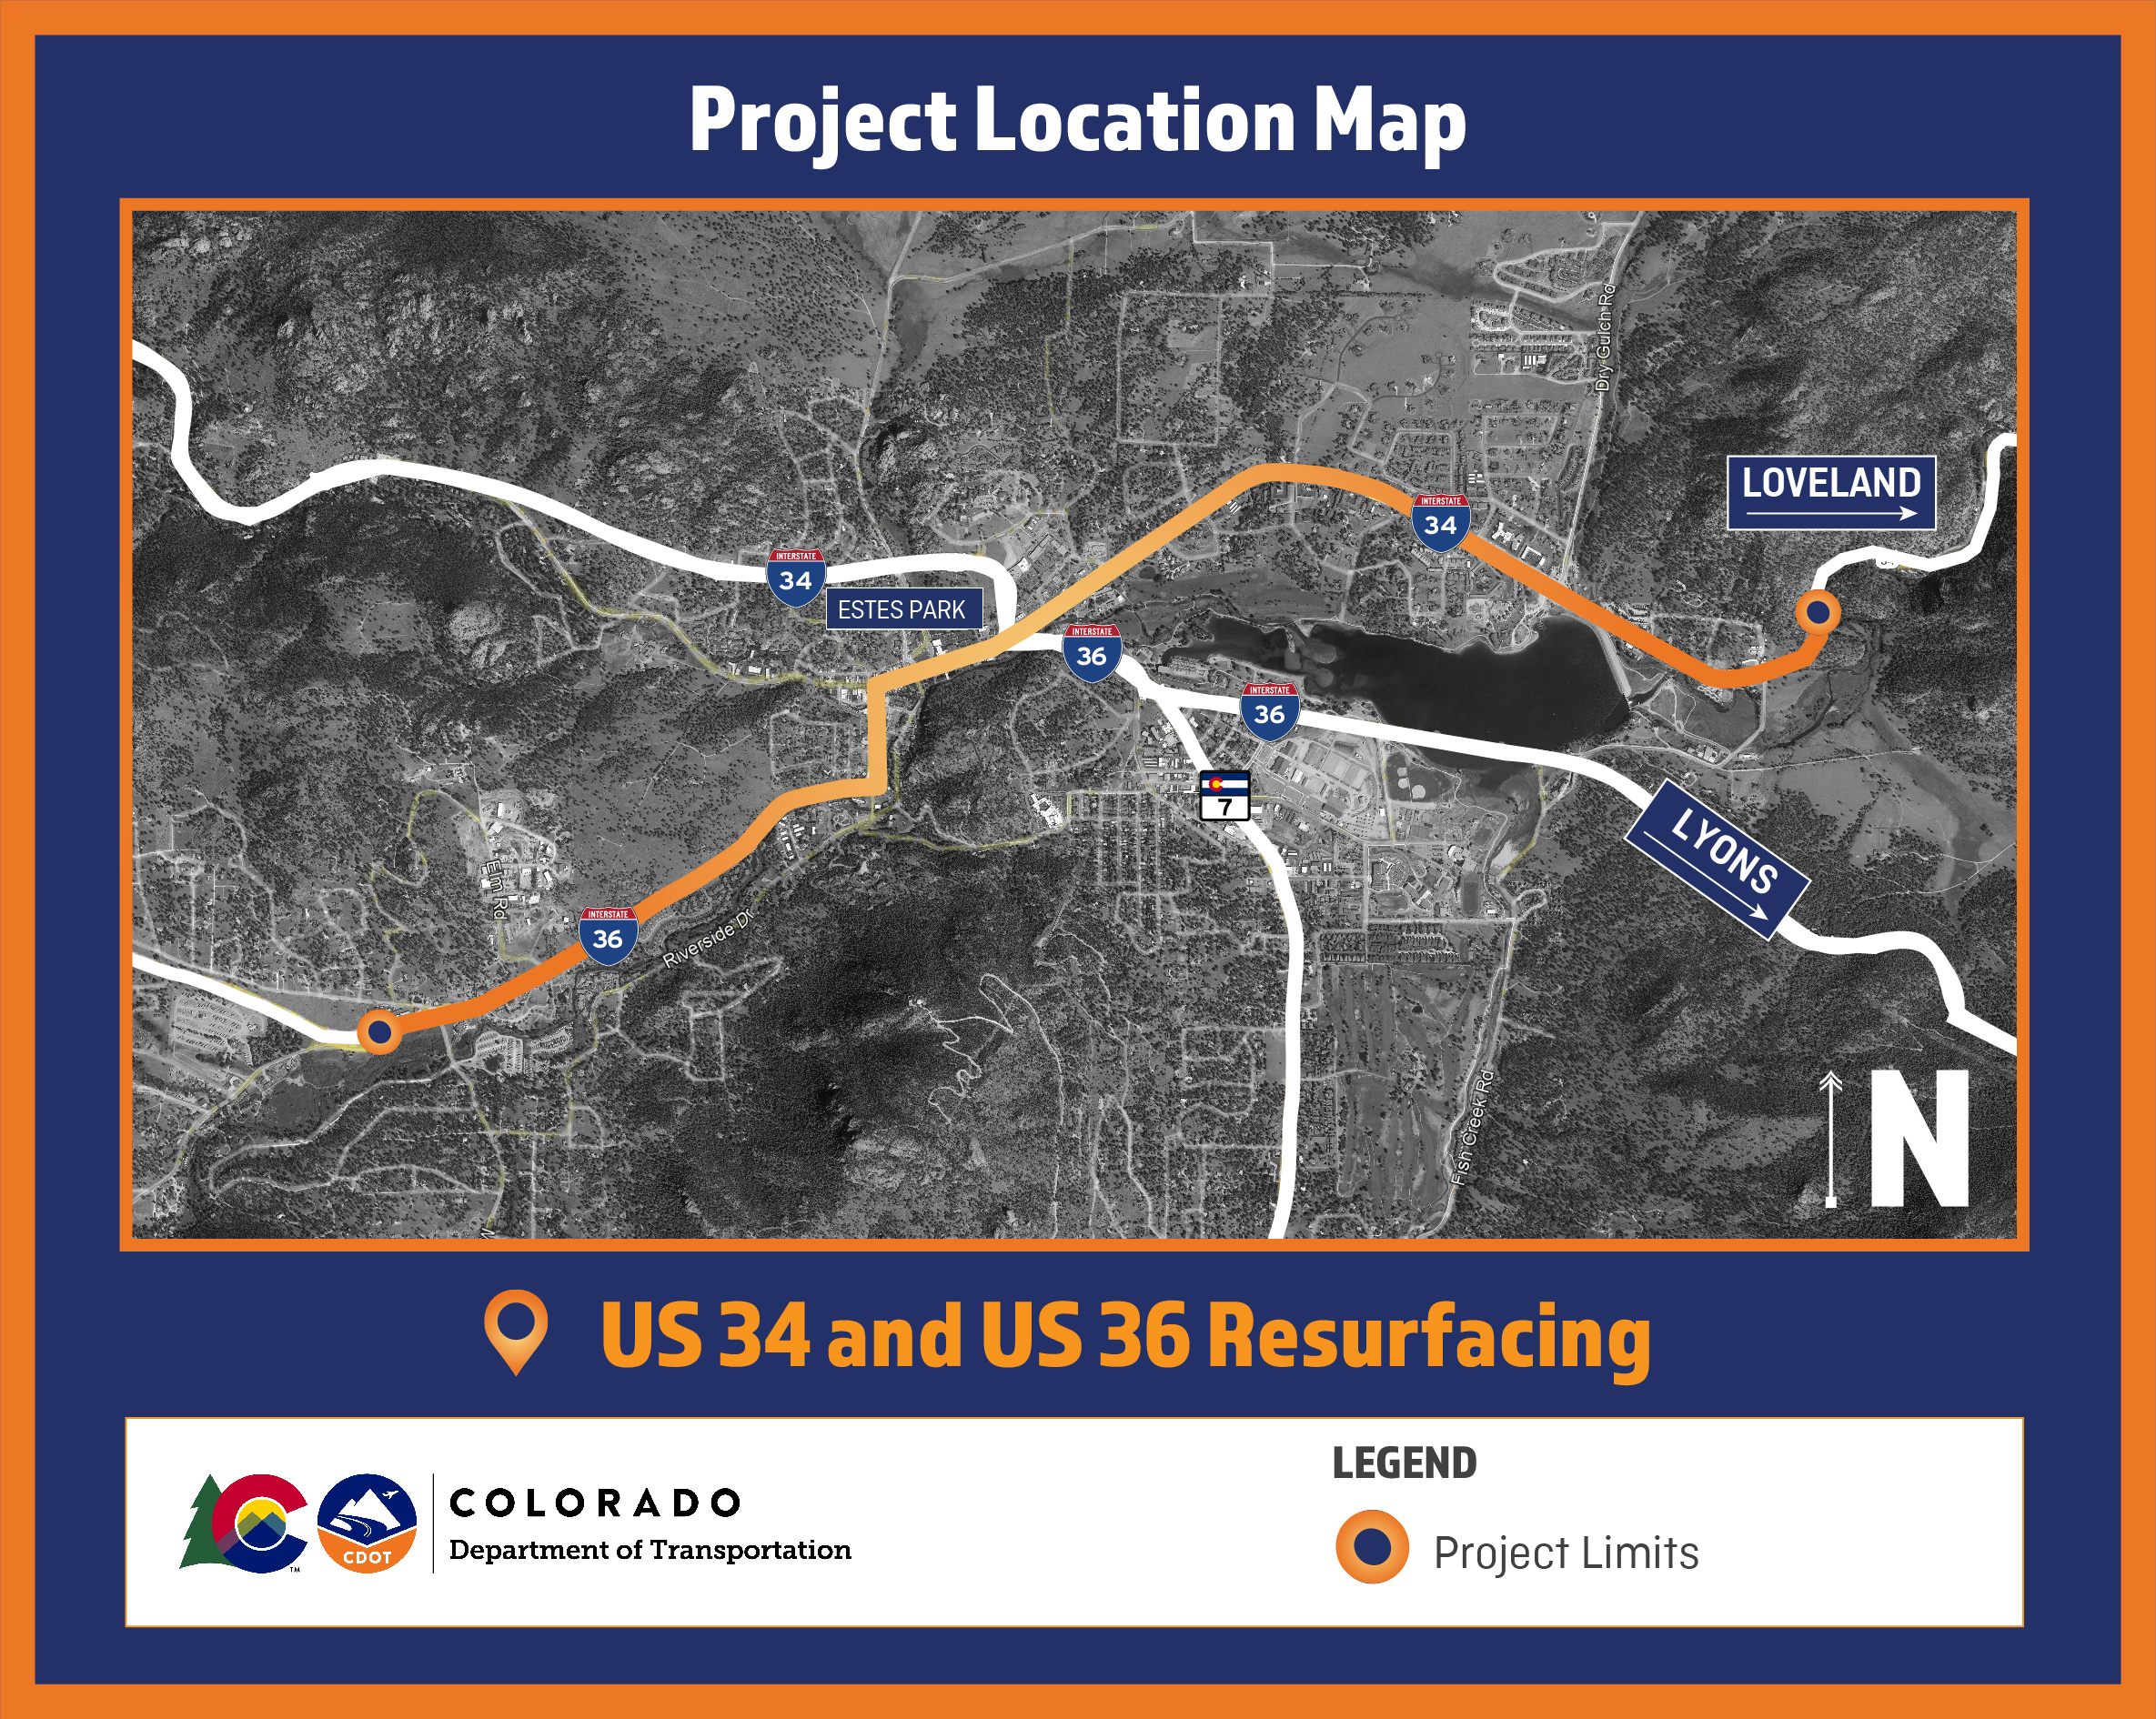 DEA_US 34 and US 36 Resurfacing_Map_No Milestones.jpg detail image